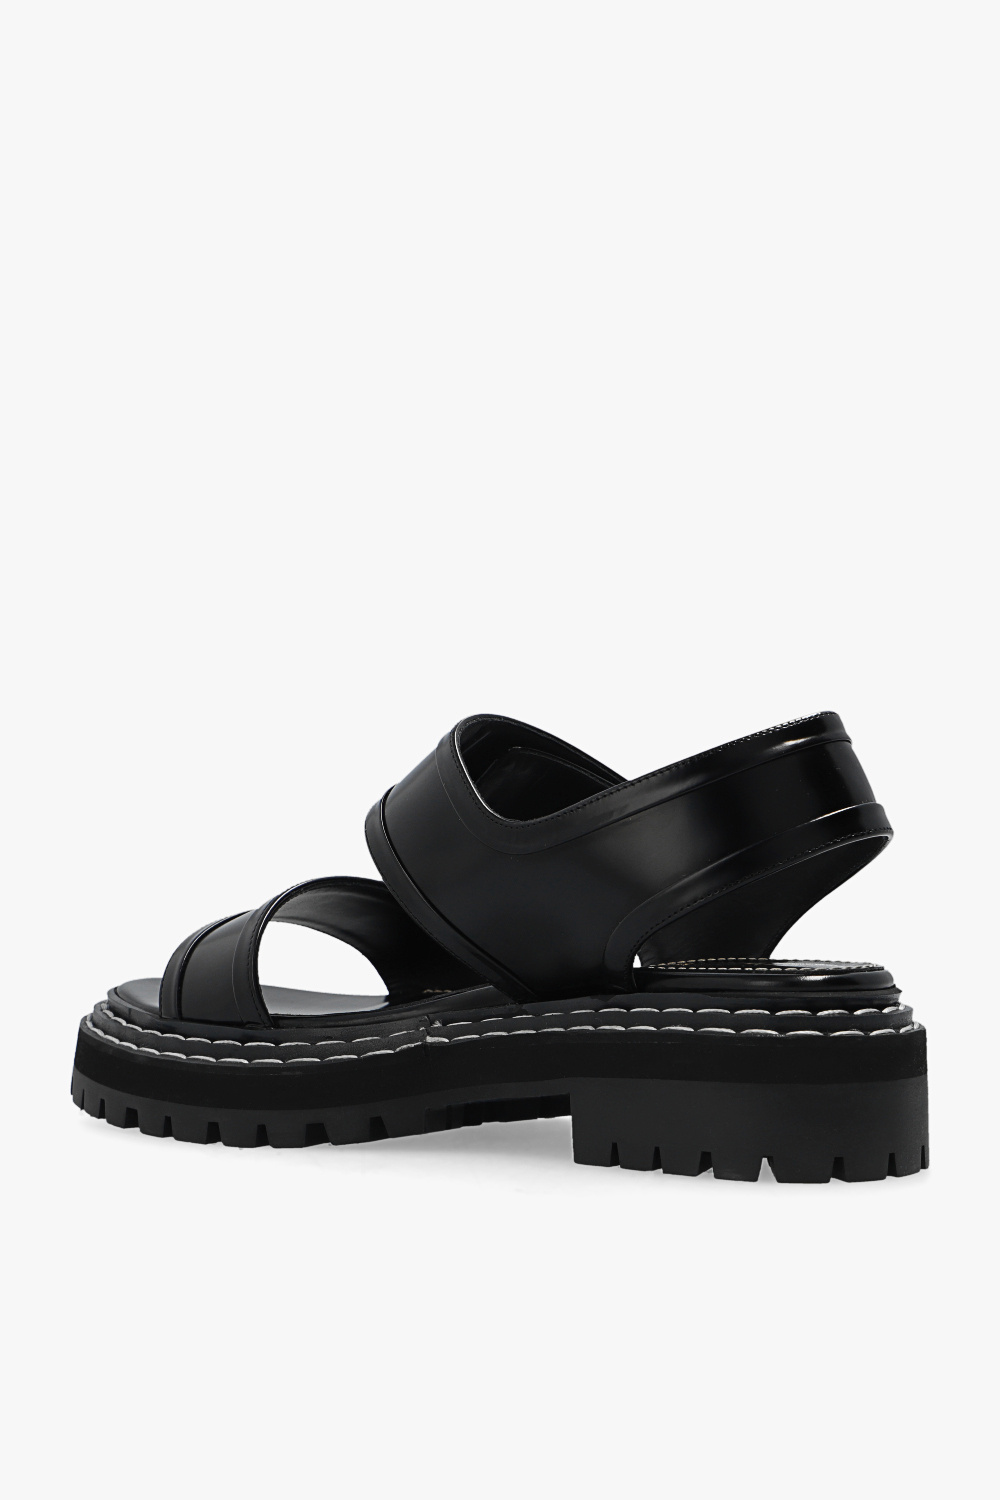 Proenza Schouler Leather sandals